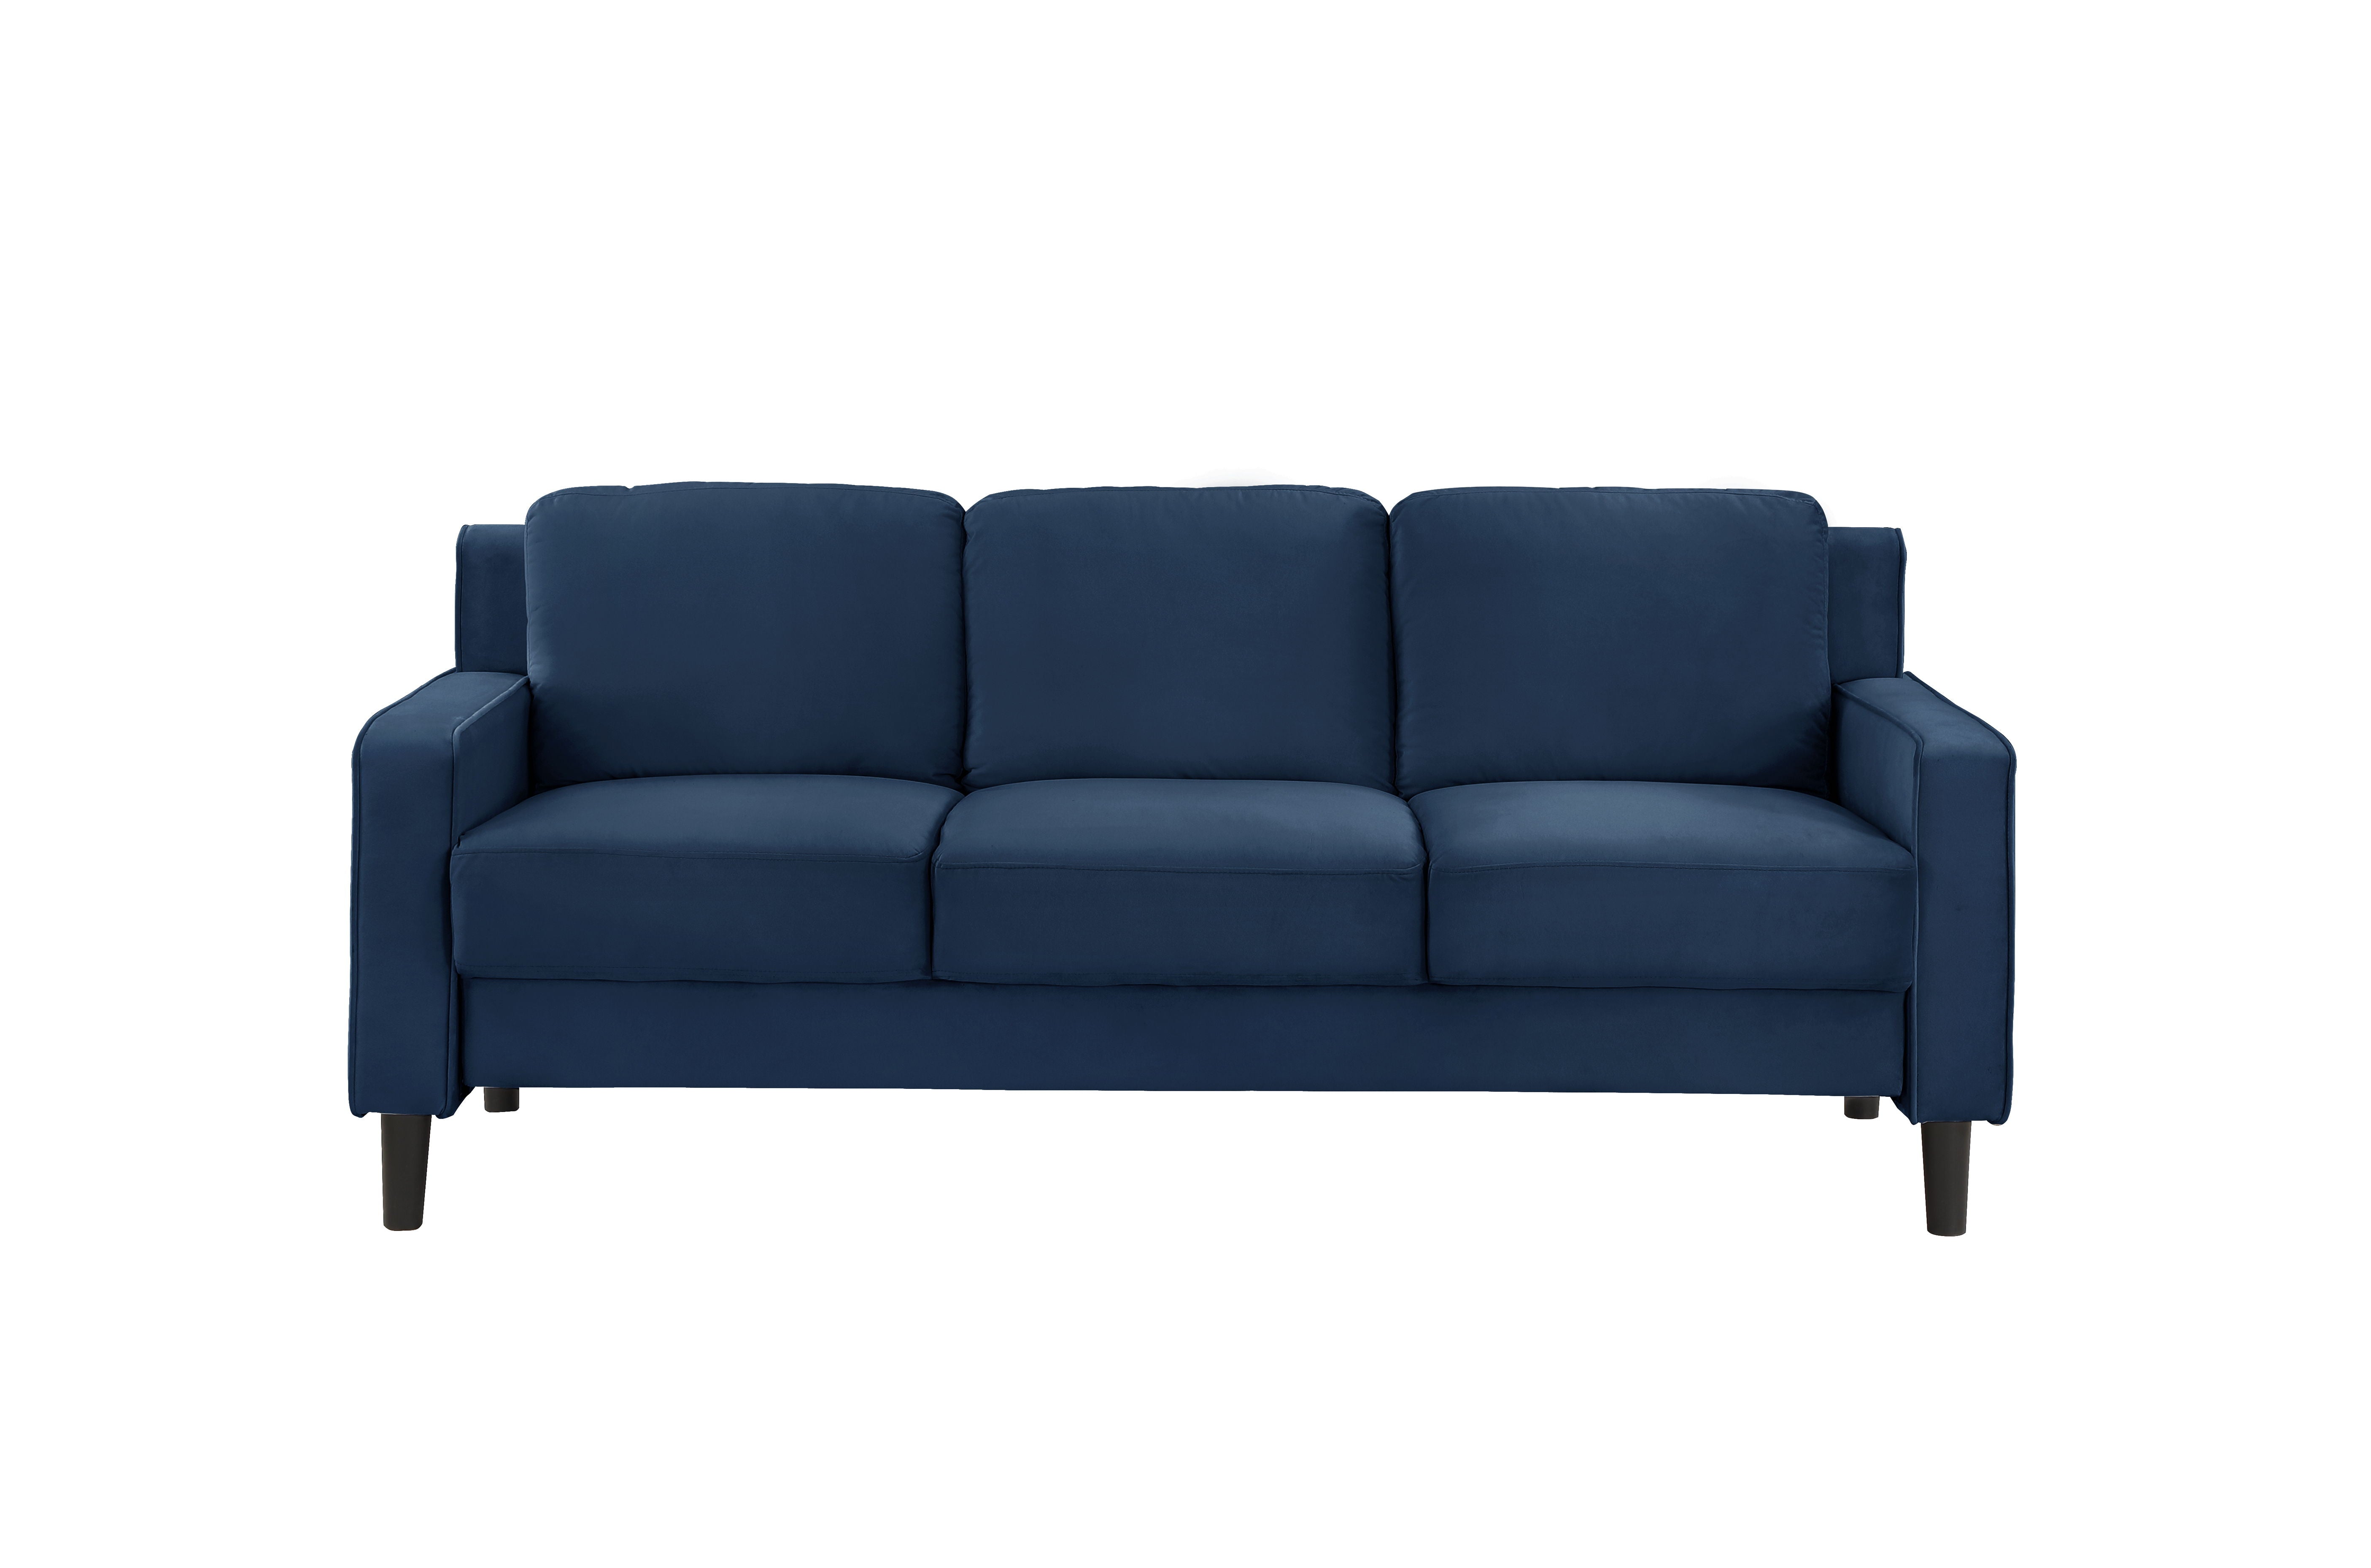 3 Seater Sofa For Small Space, Bedroom, Apartment, Studio - Dark Blue